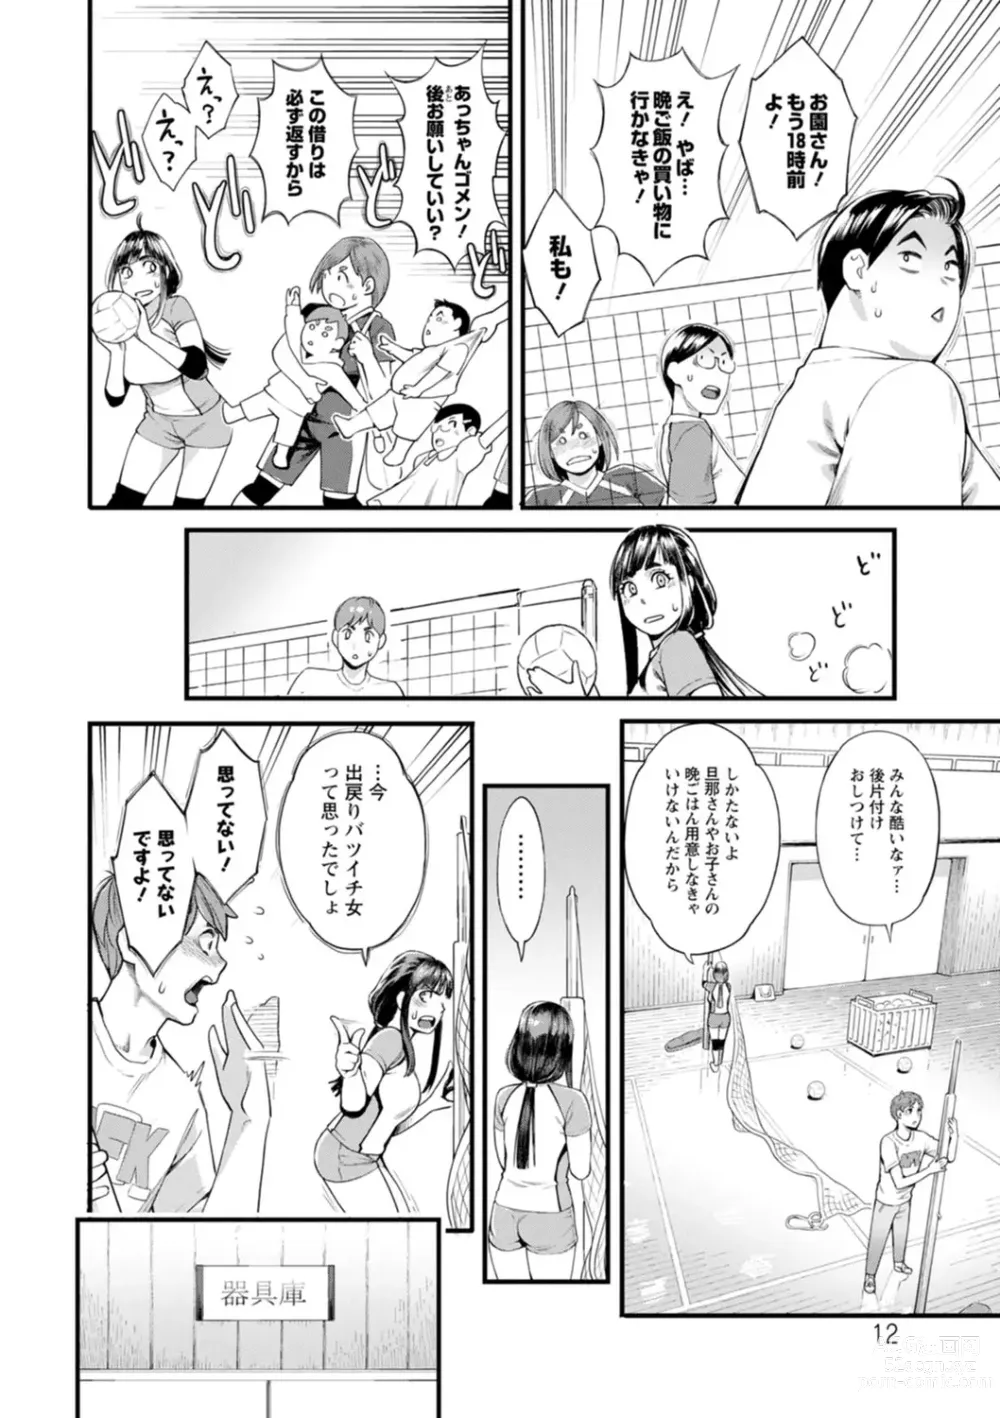 Page 12 of manga Hoshigaoka Star Volley